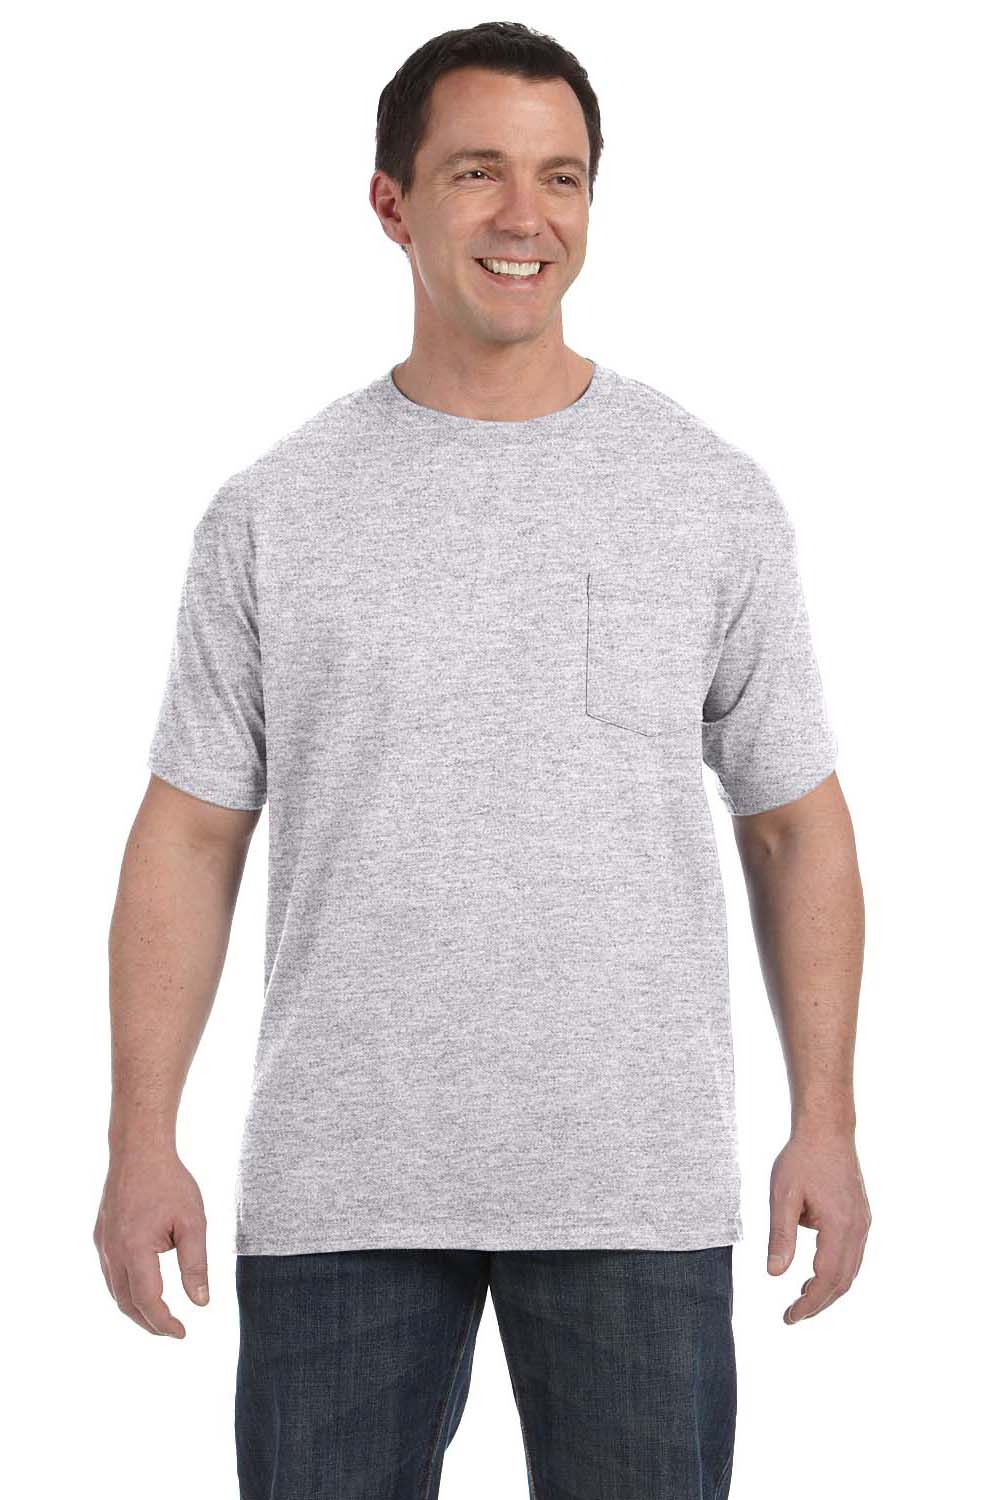 Hanes H5590 Mens ComfortSoft Short Sleeve Crewneck T-Shirt w/ Pocket Ash Grey Front